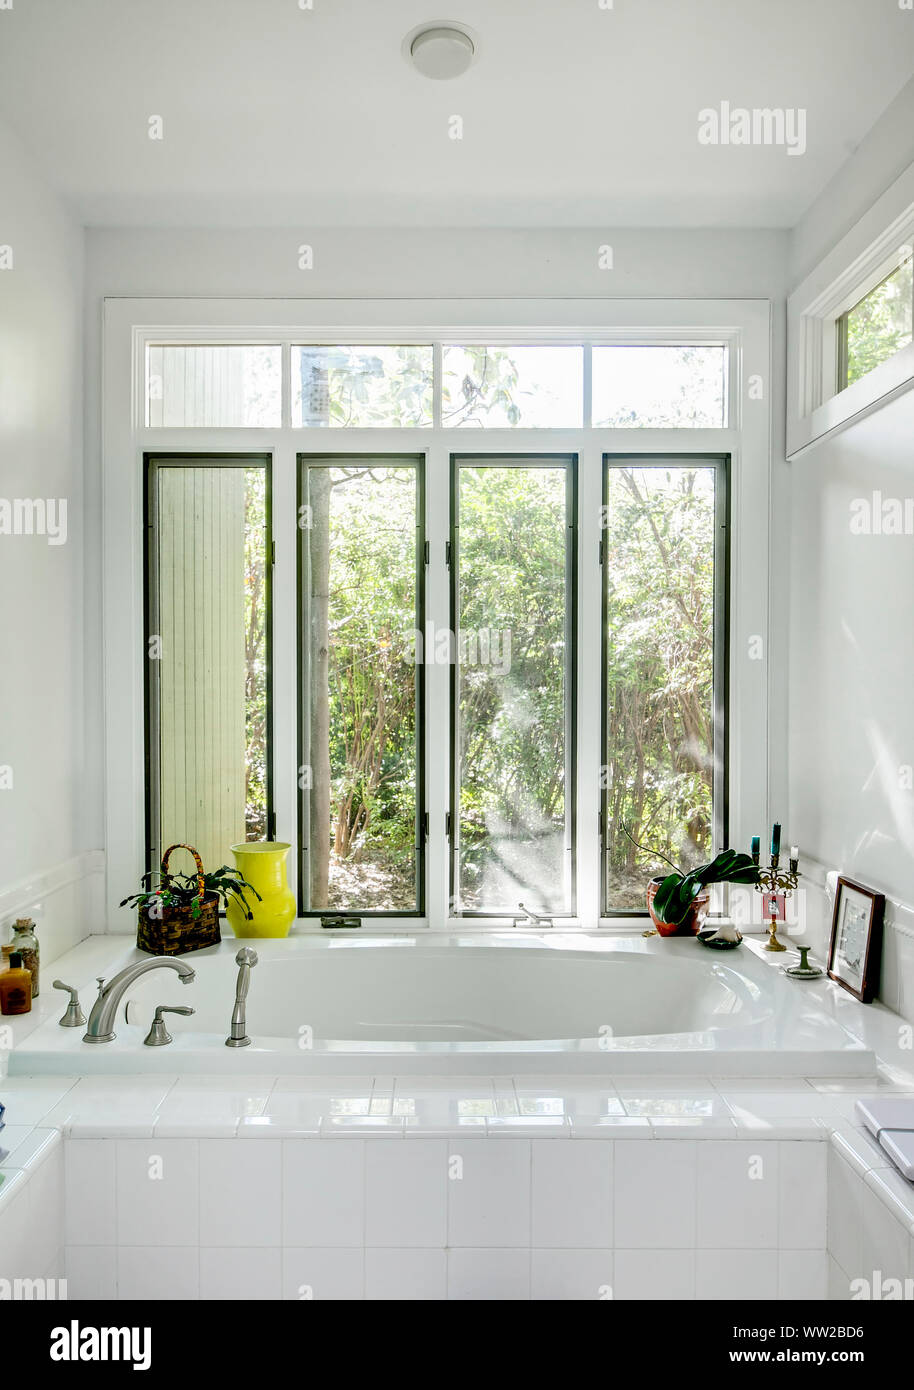 luxury whirlpool bathtub with windows Stock Photo